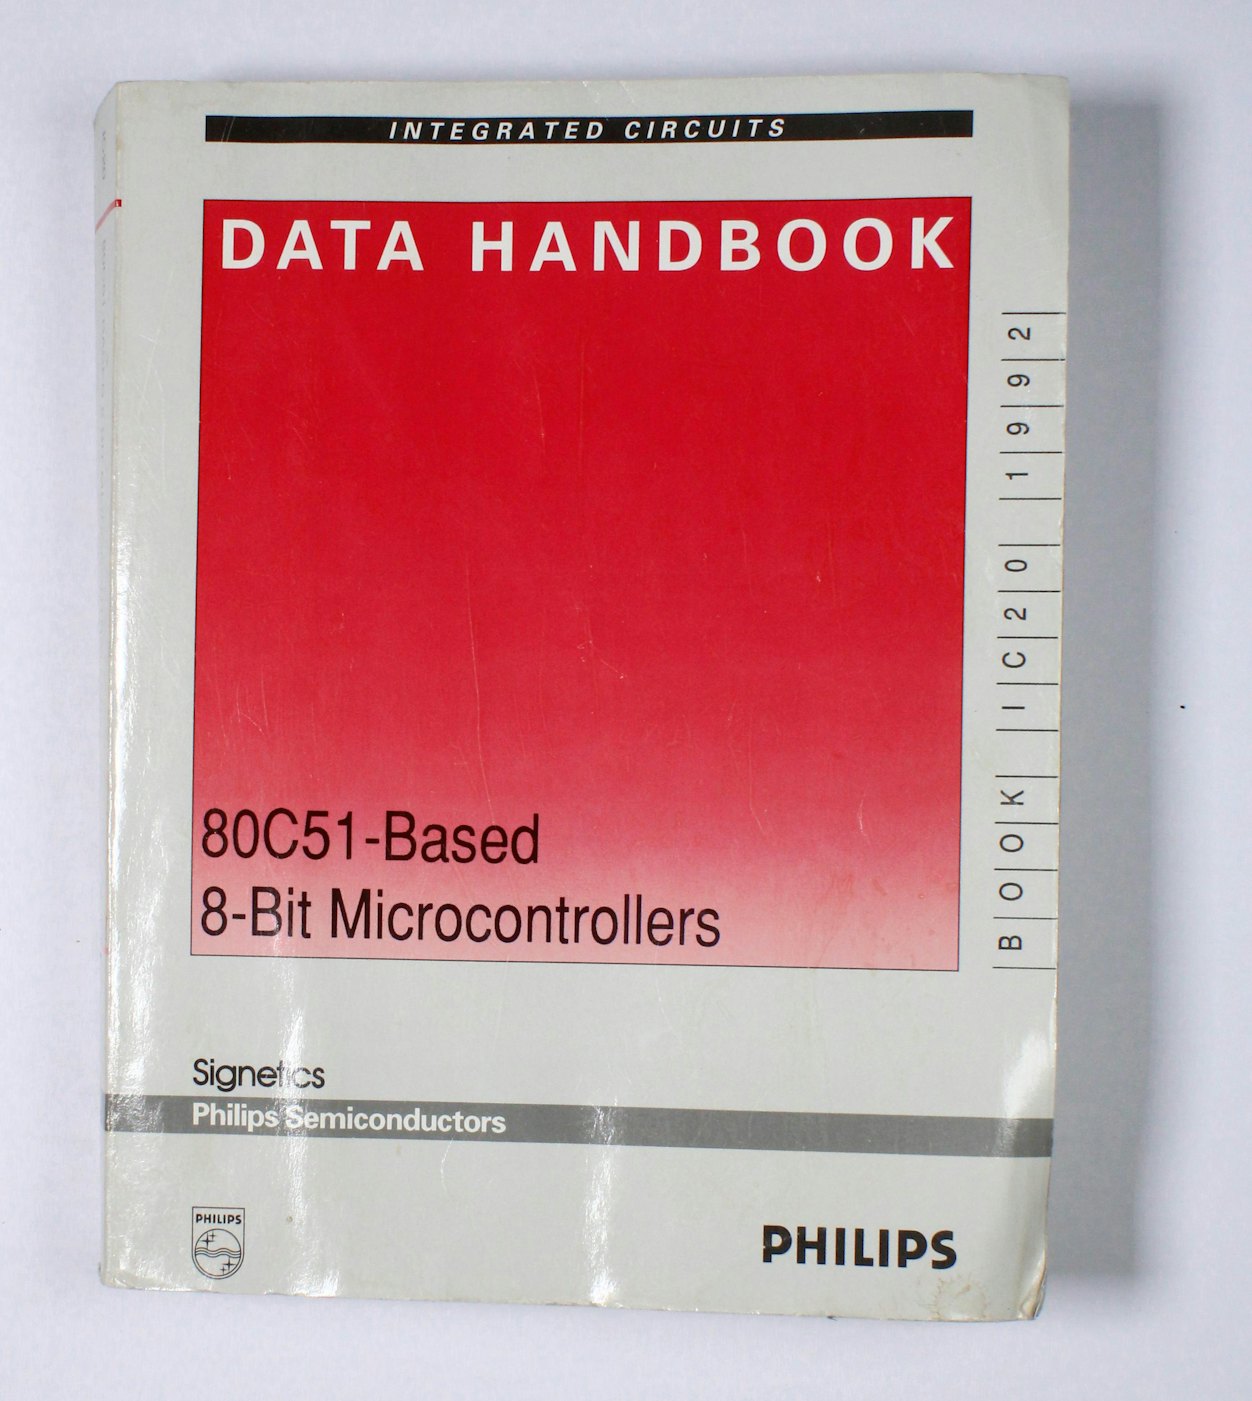 Data Handbook 80C51-Based 8-Bit Microcontrollers